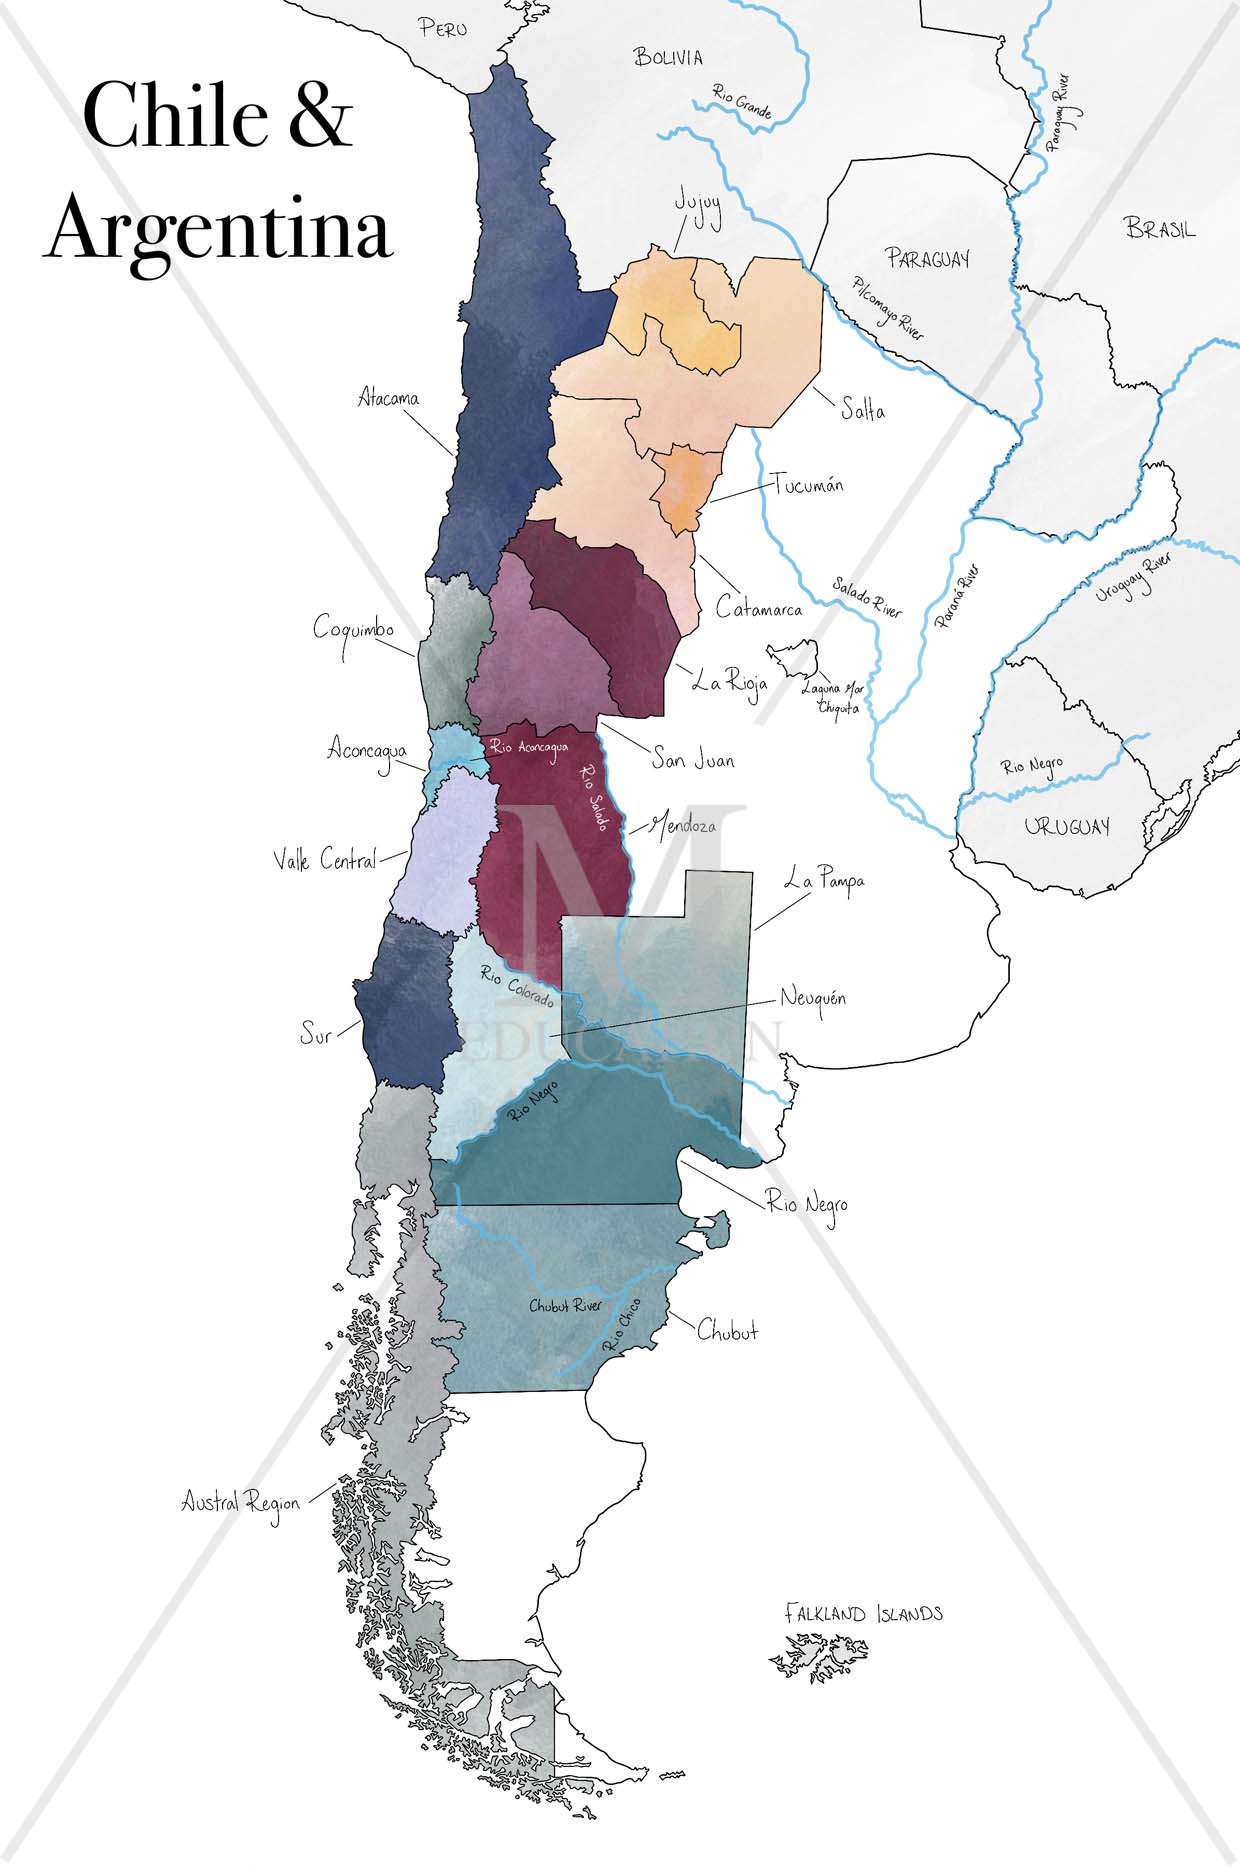 argentina wine map  Wine map, Wine region map, Wine education